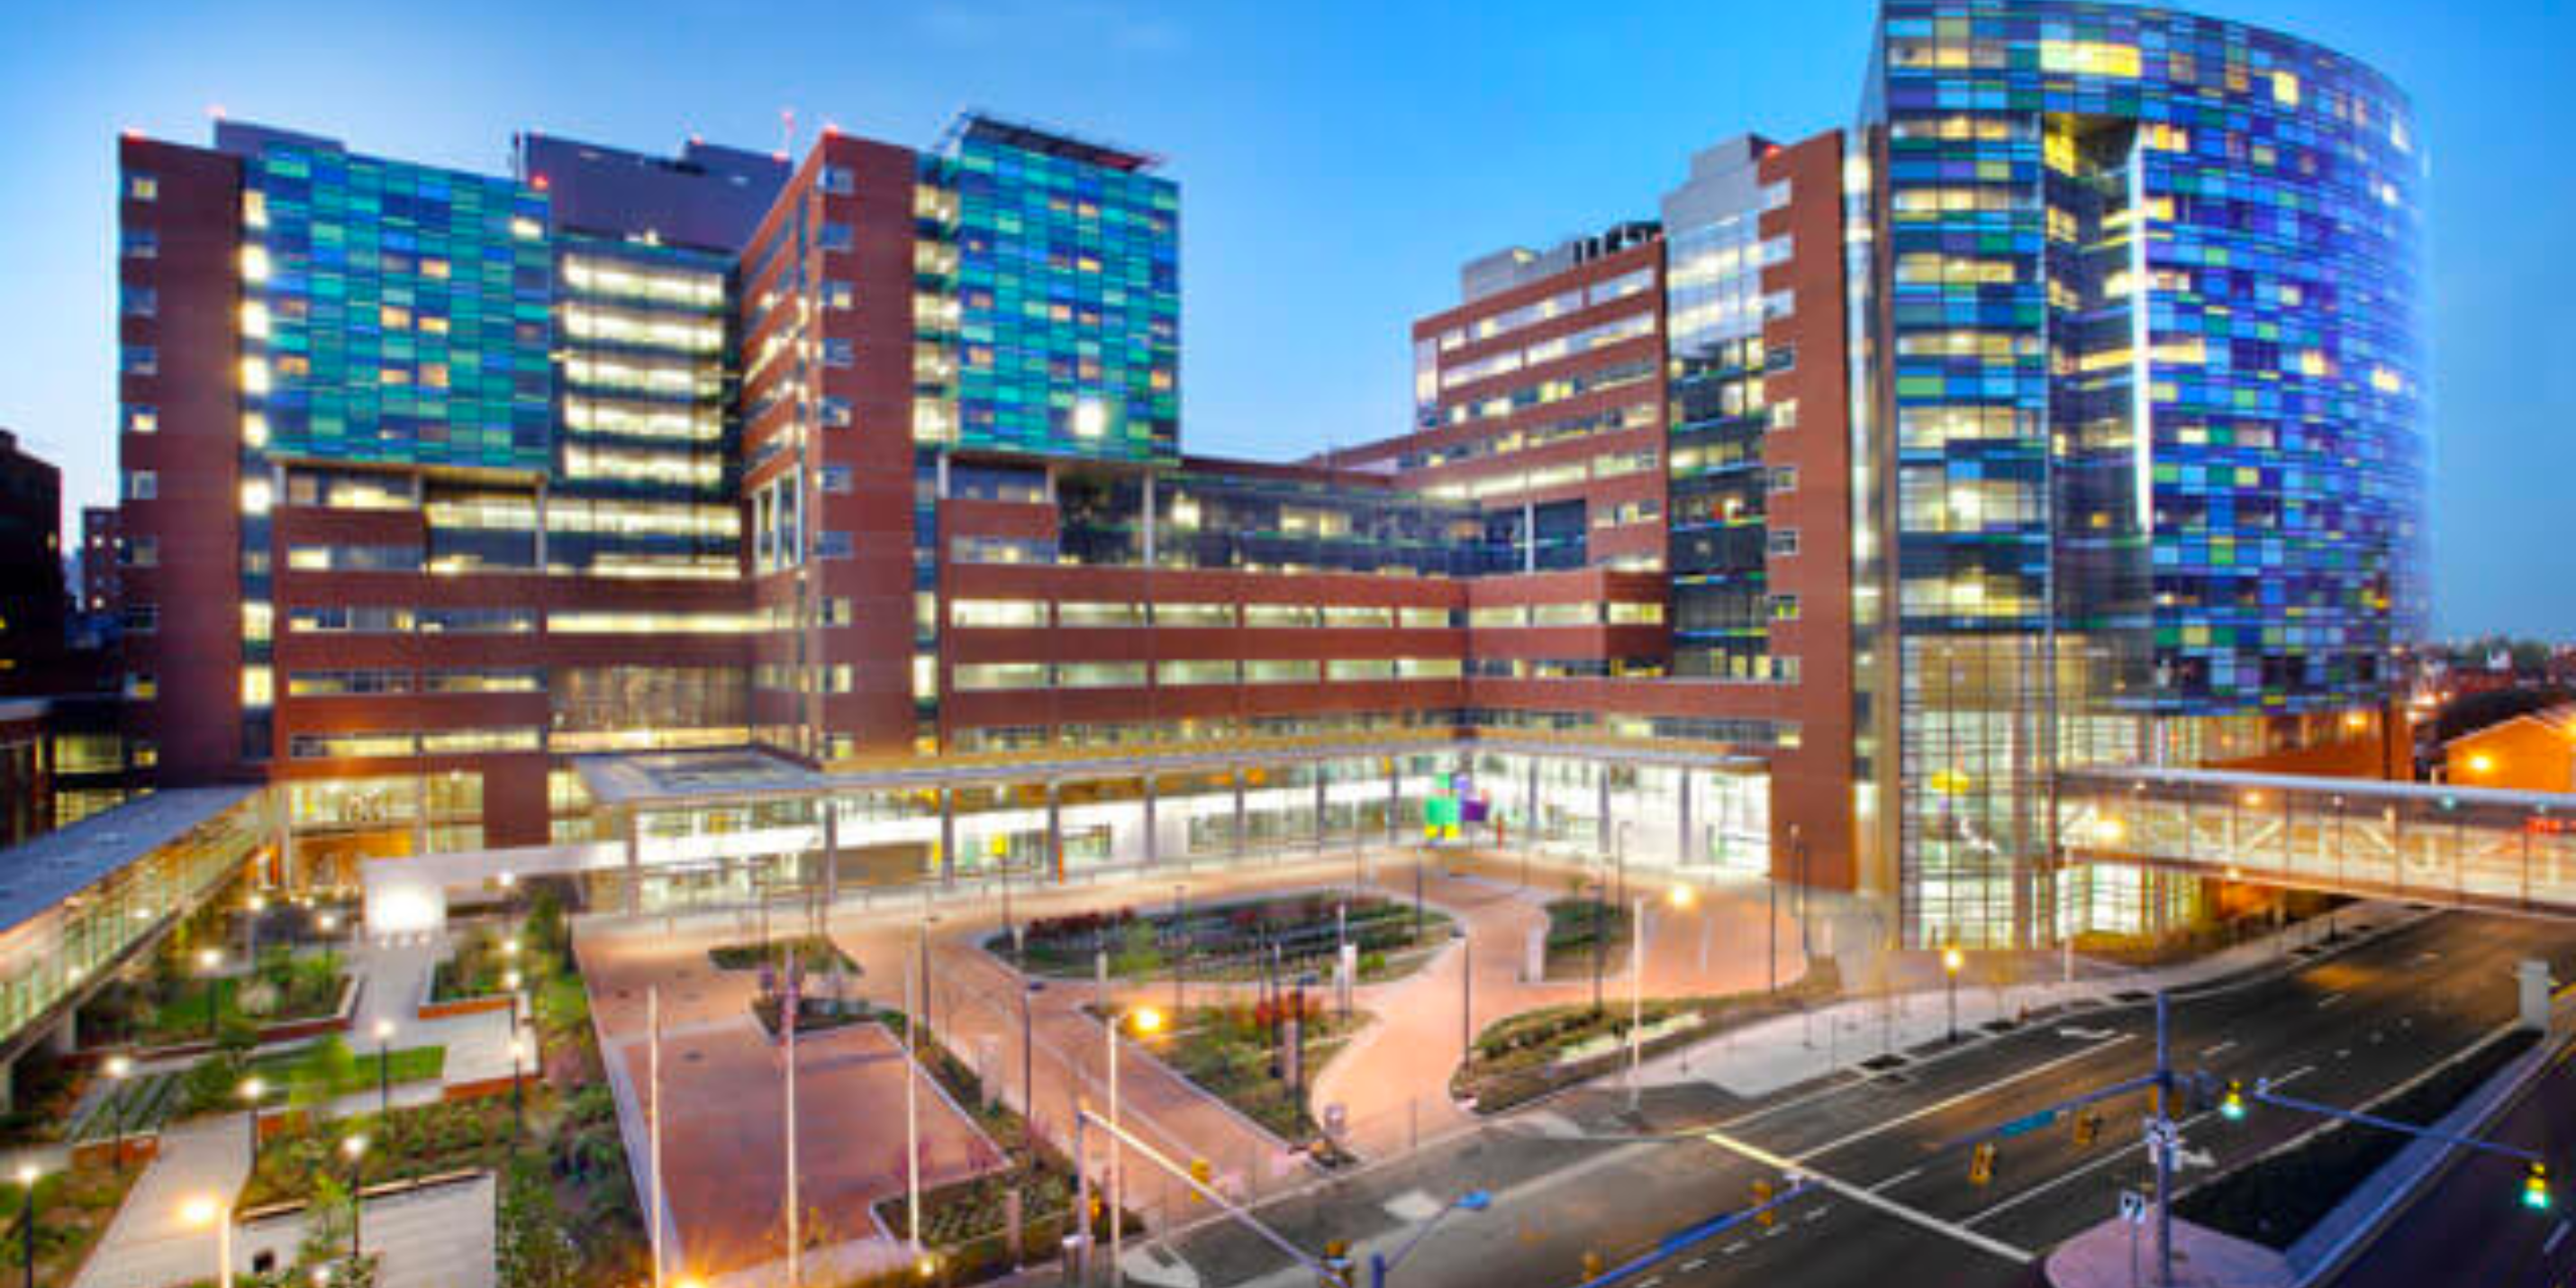 The Johns Hopkins Hospital Maryland